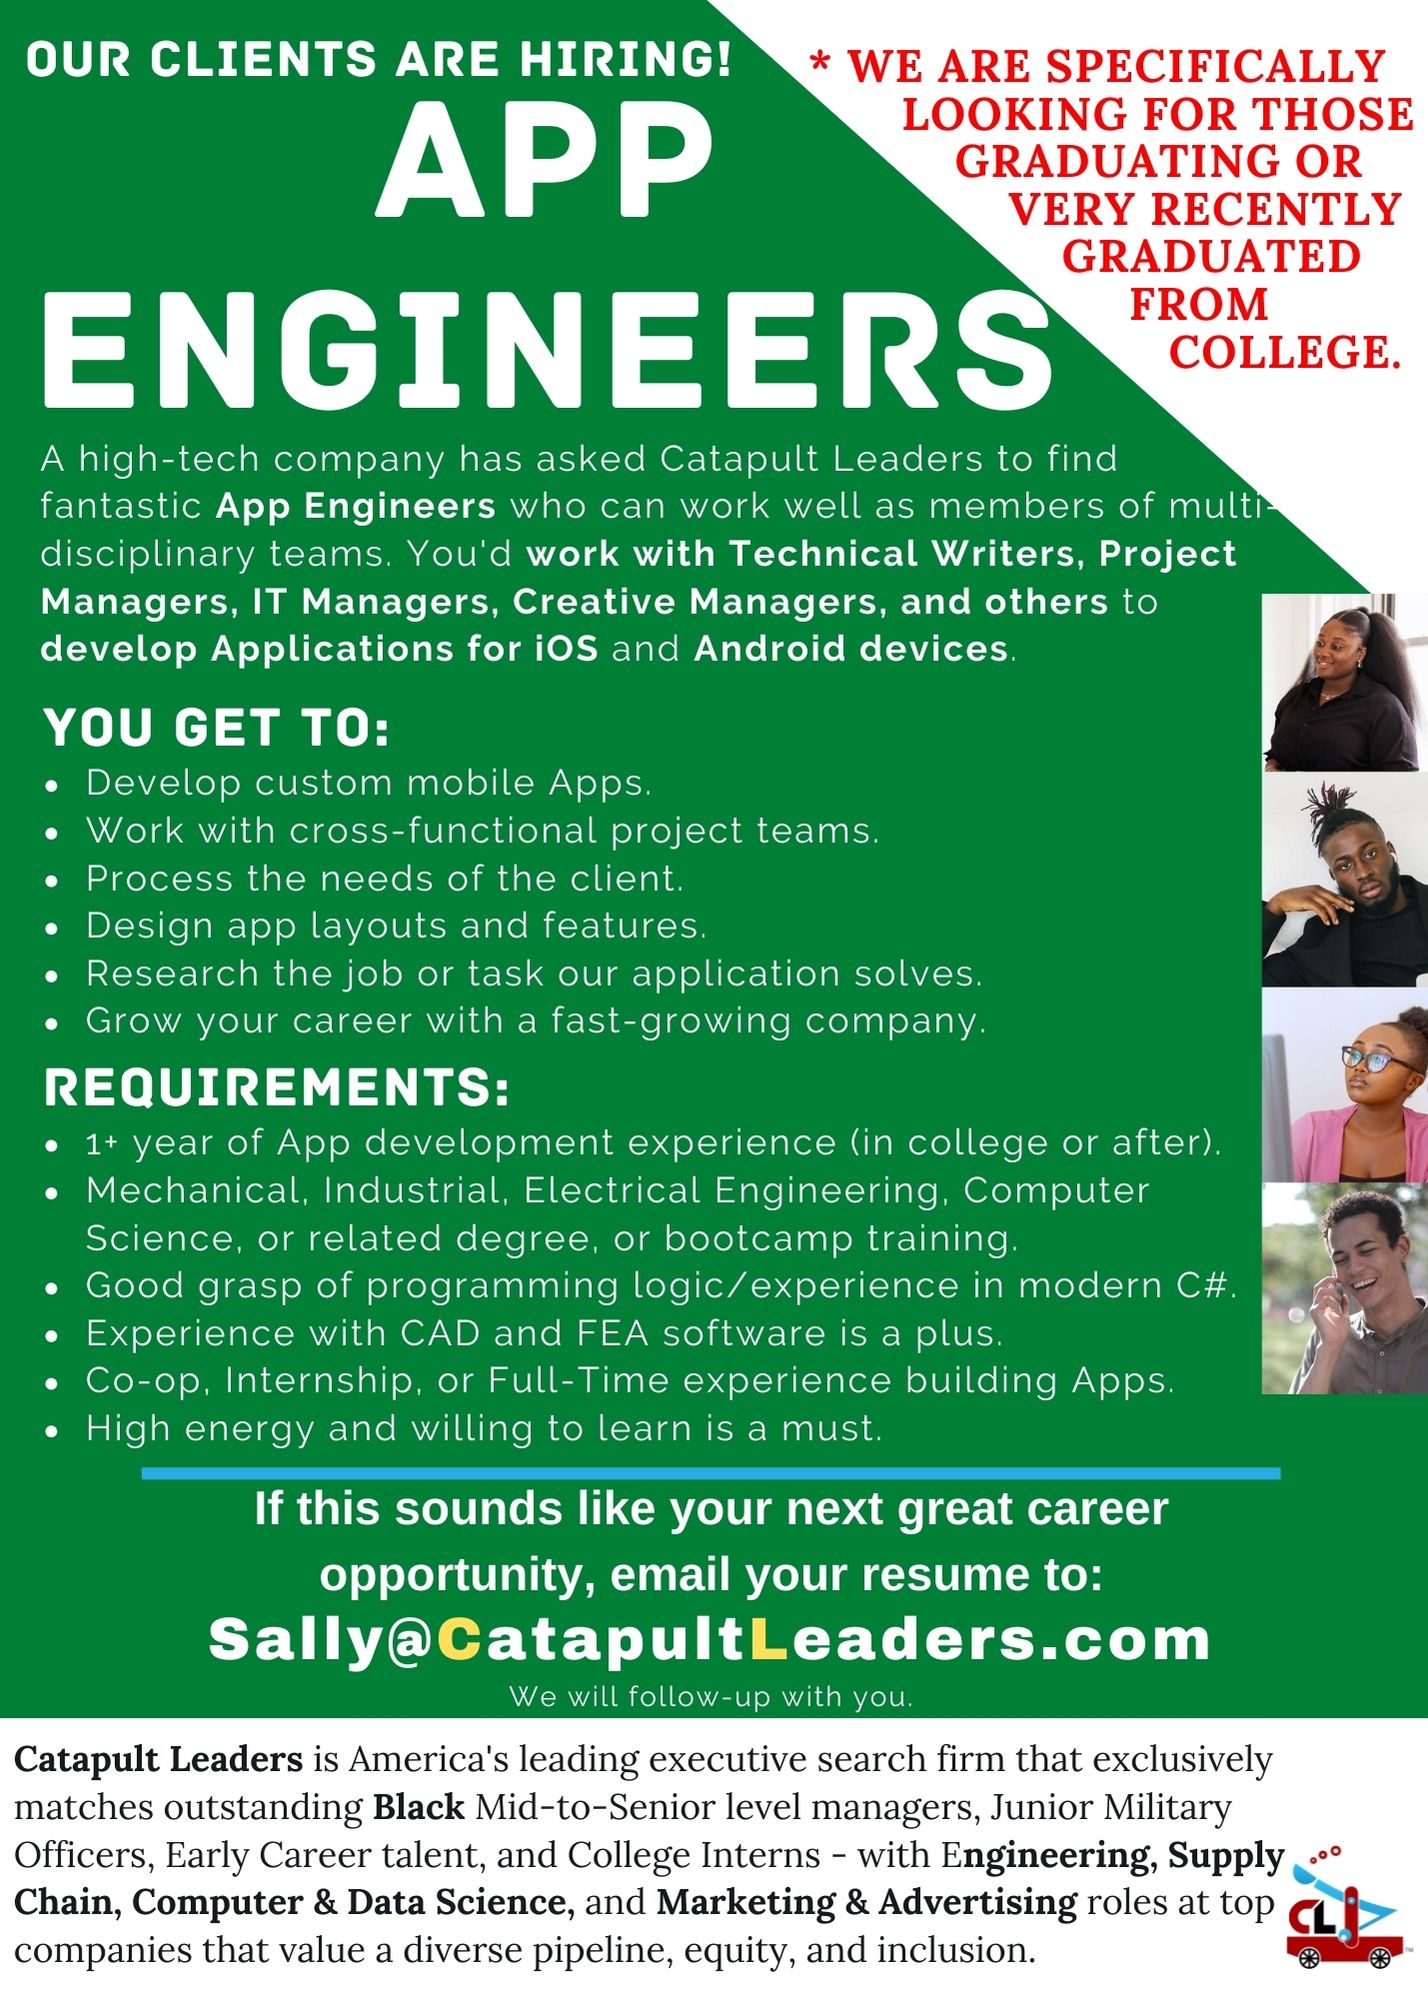 App Engineer - Catapult Leaders